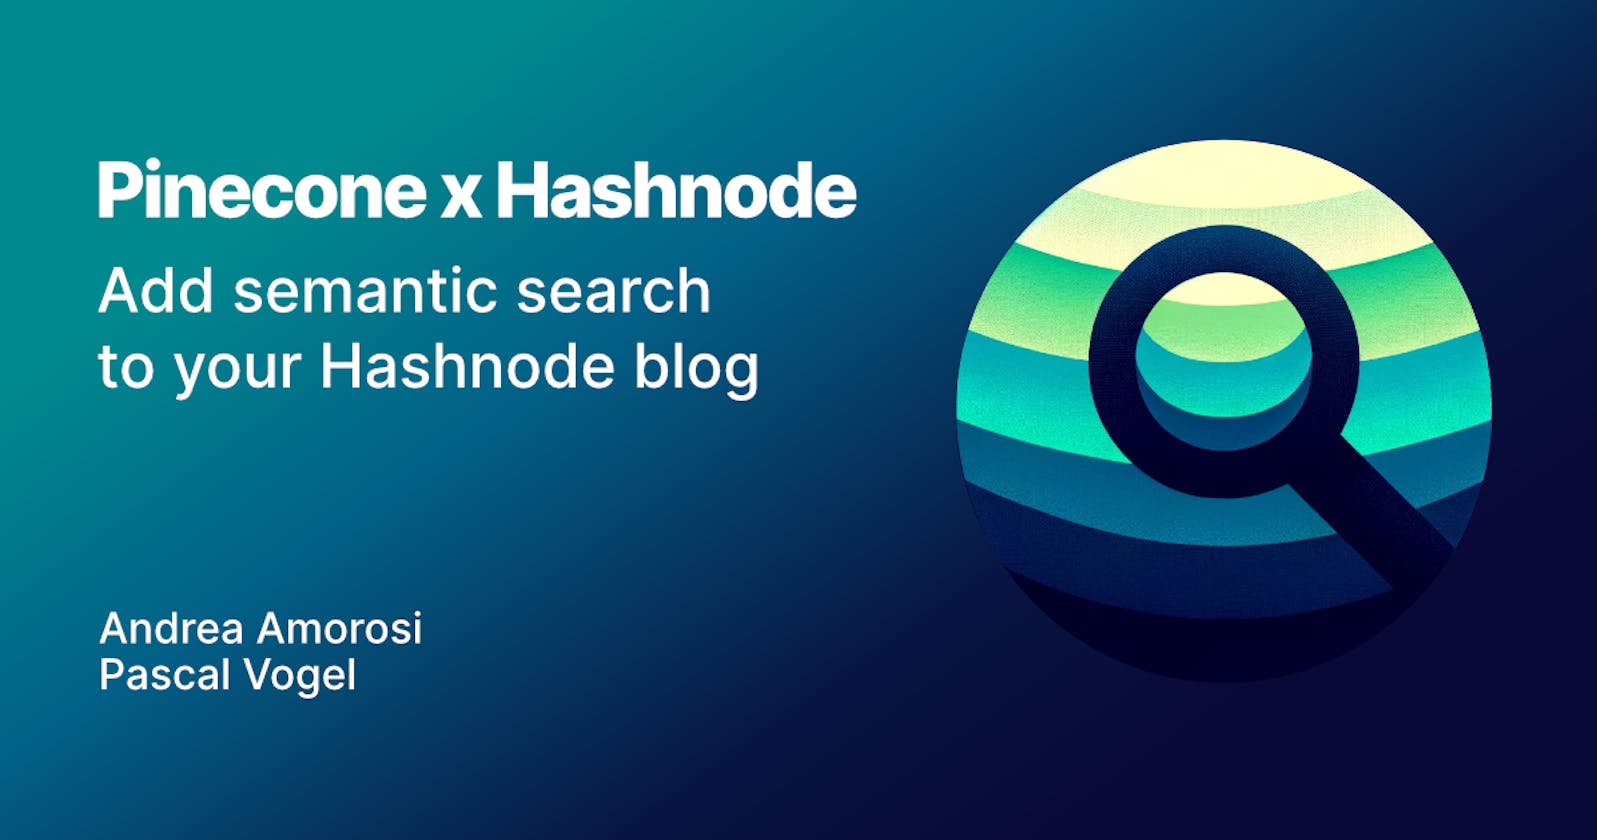 Pinecone x Hashnode: add semantic search to your Hashnode blog posts